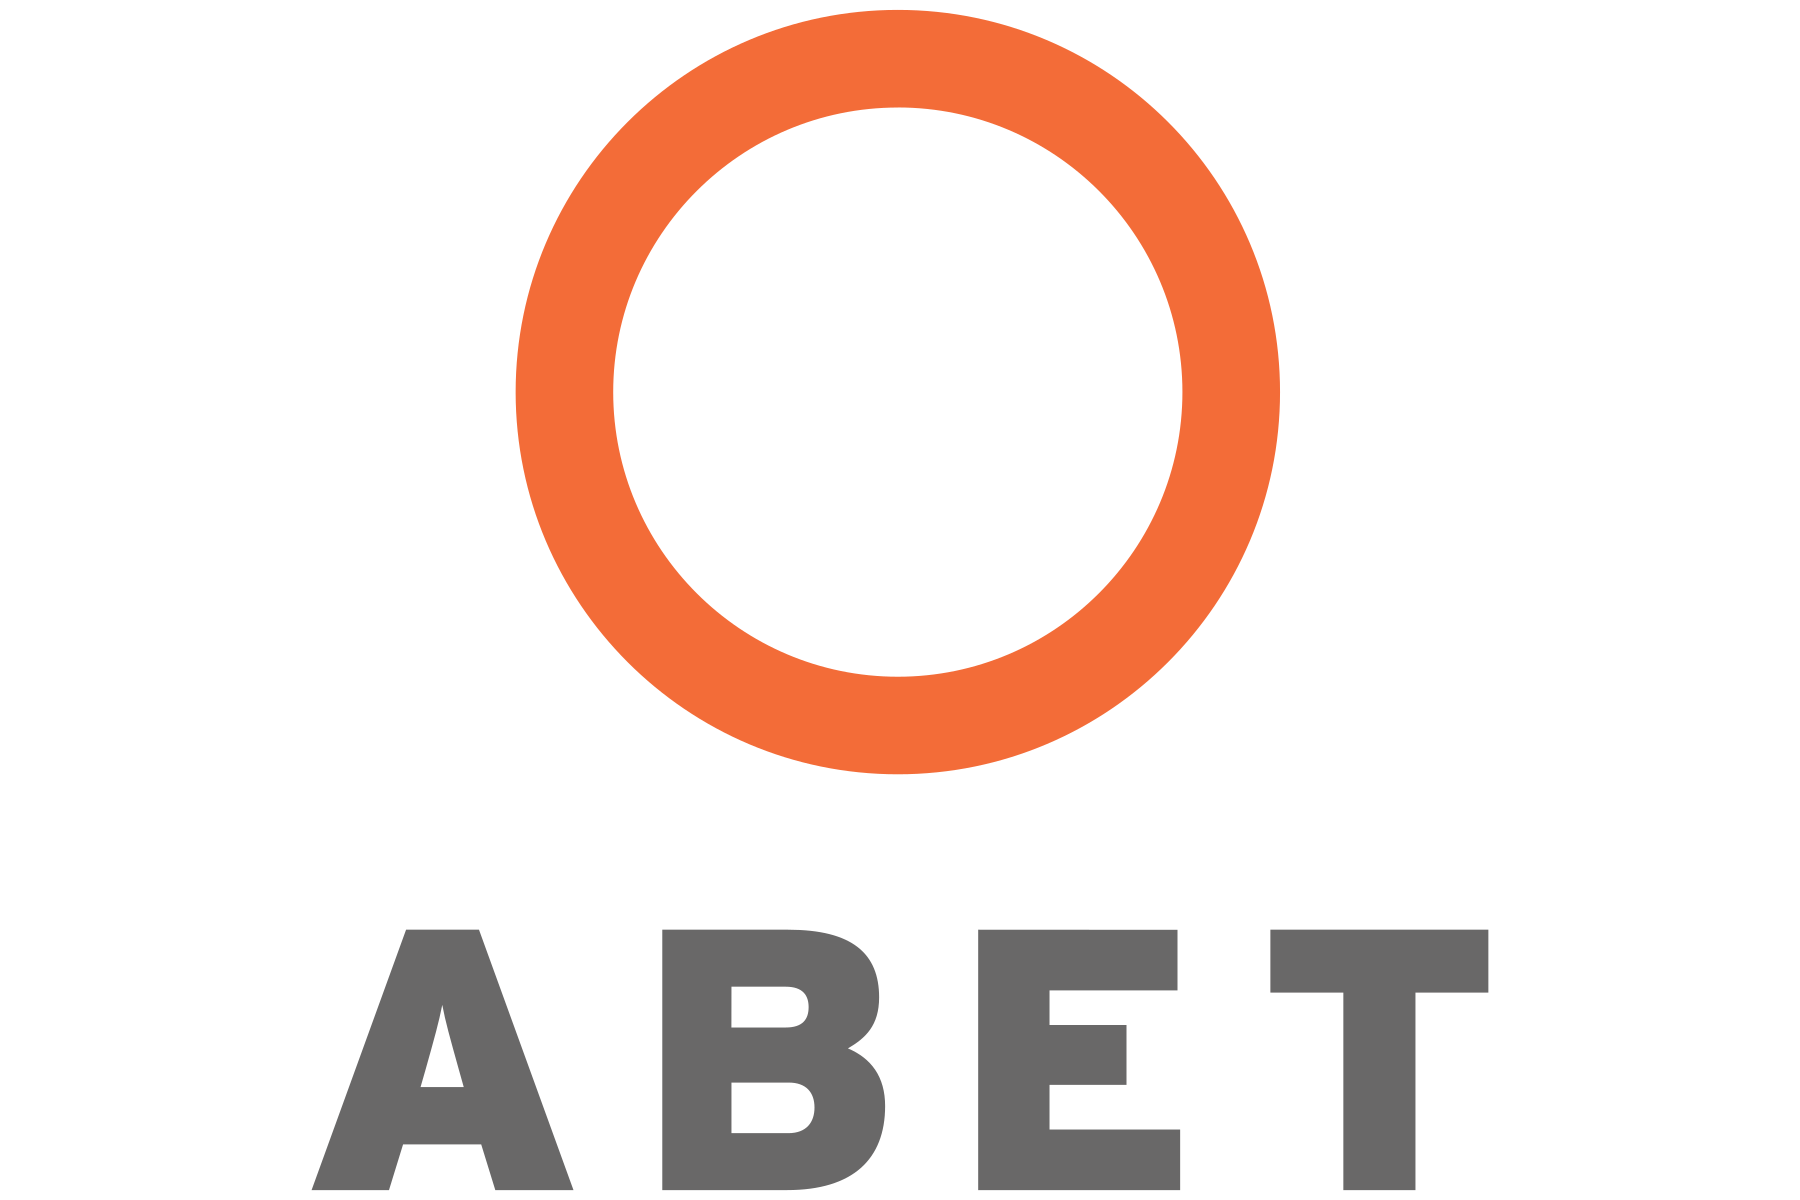 ABET logo with orange circle and gray writing underneath.